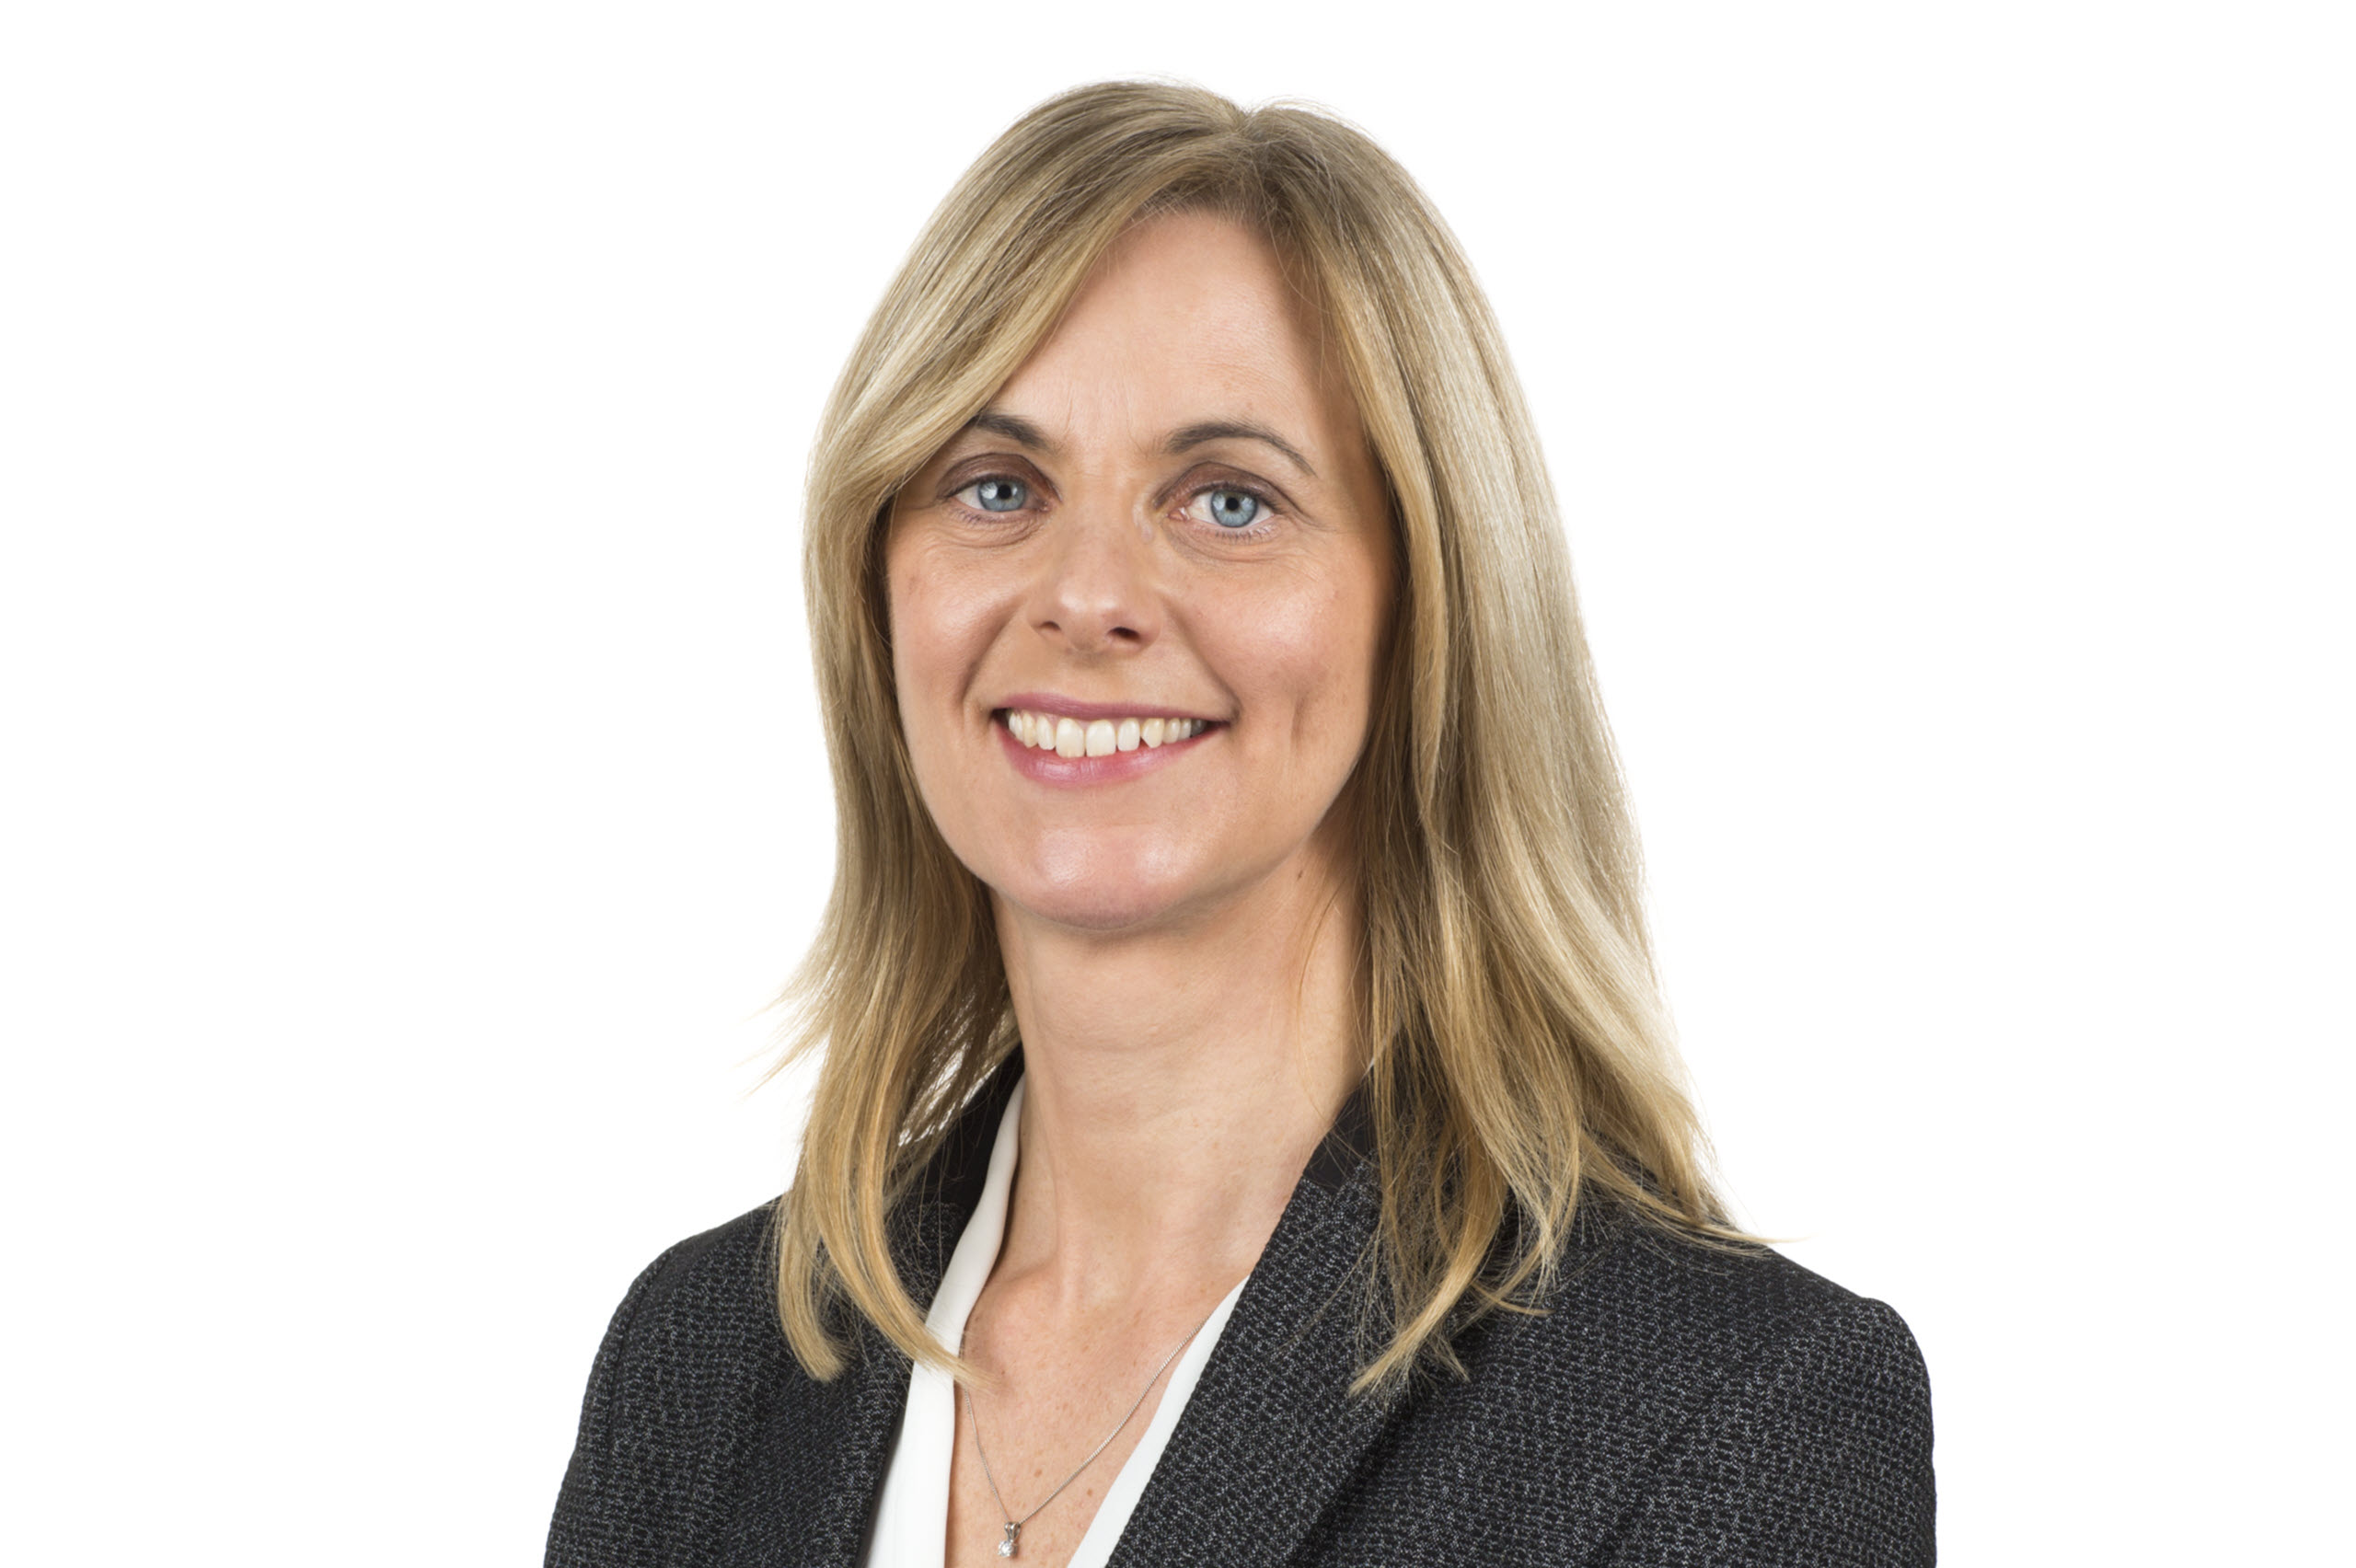 Anya O'Reilly, Finance Director